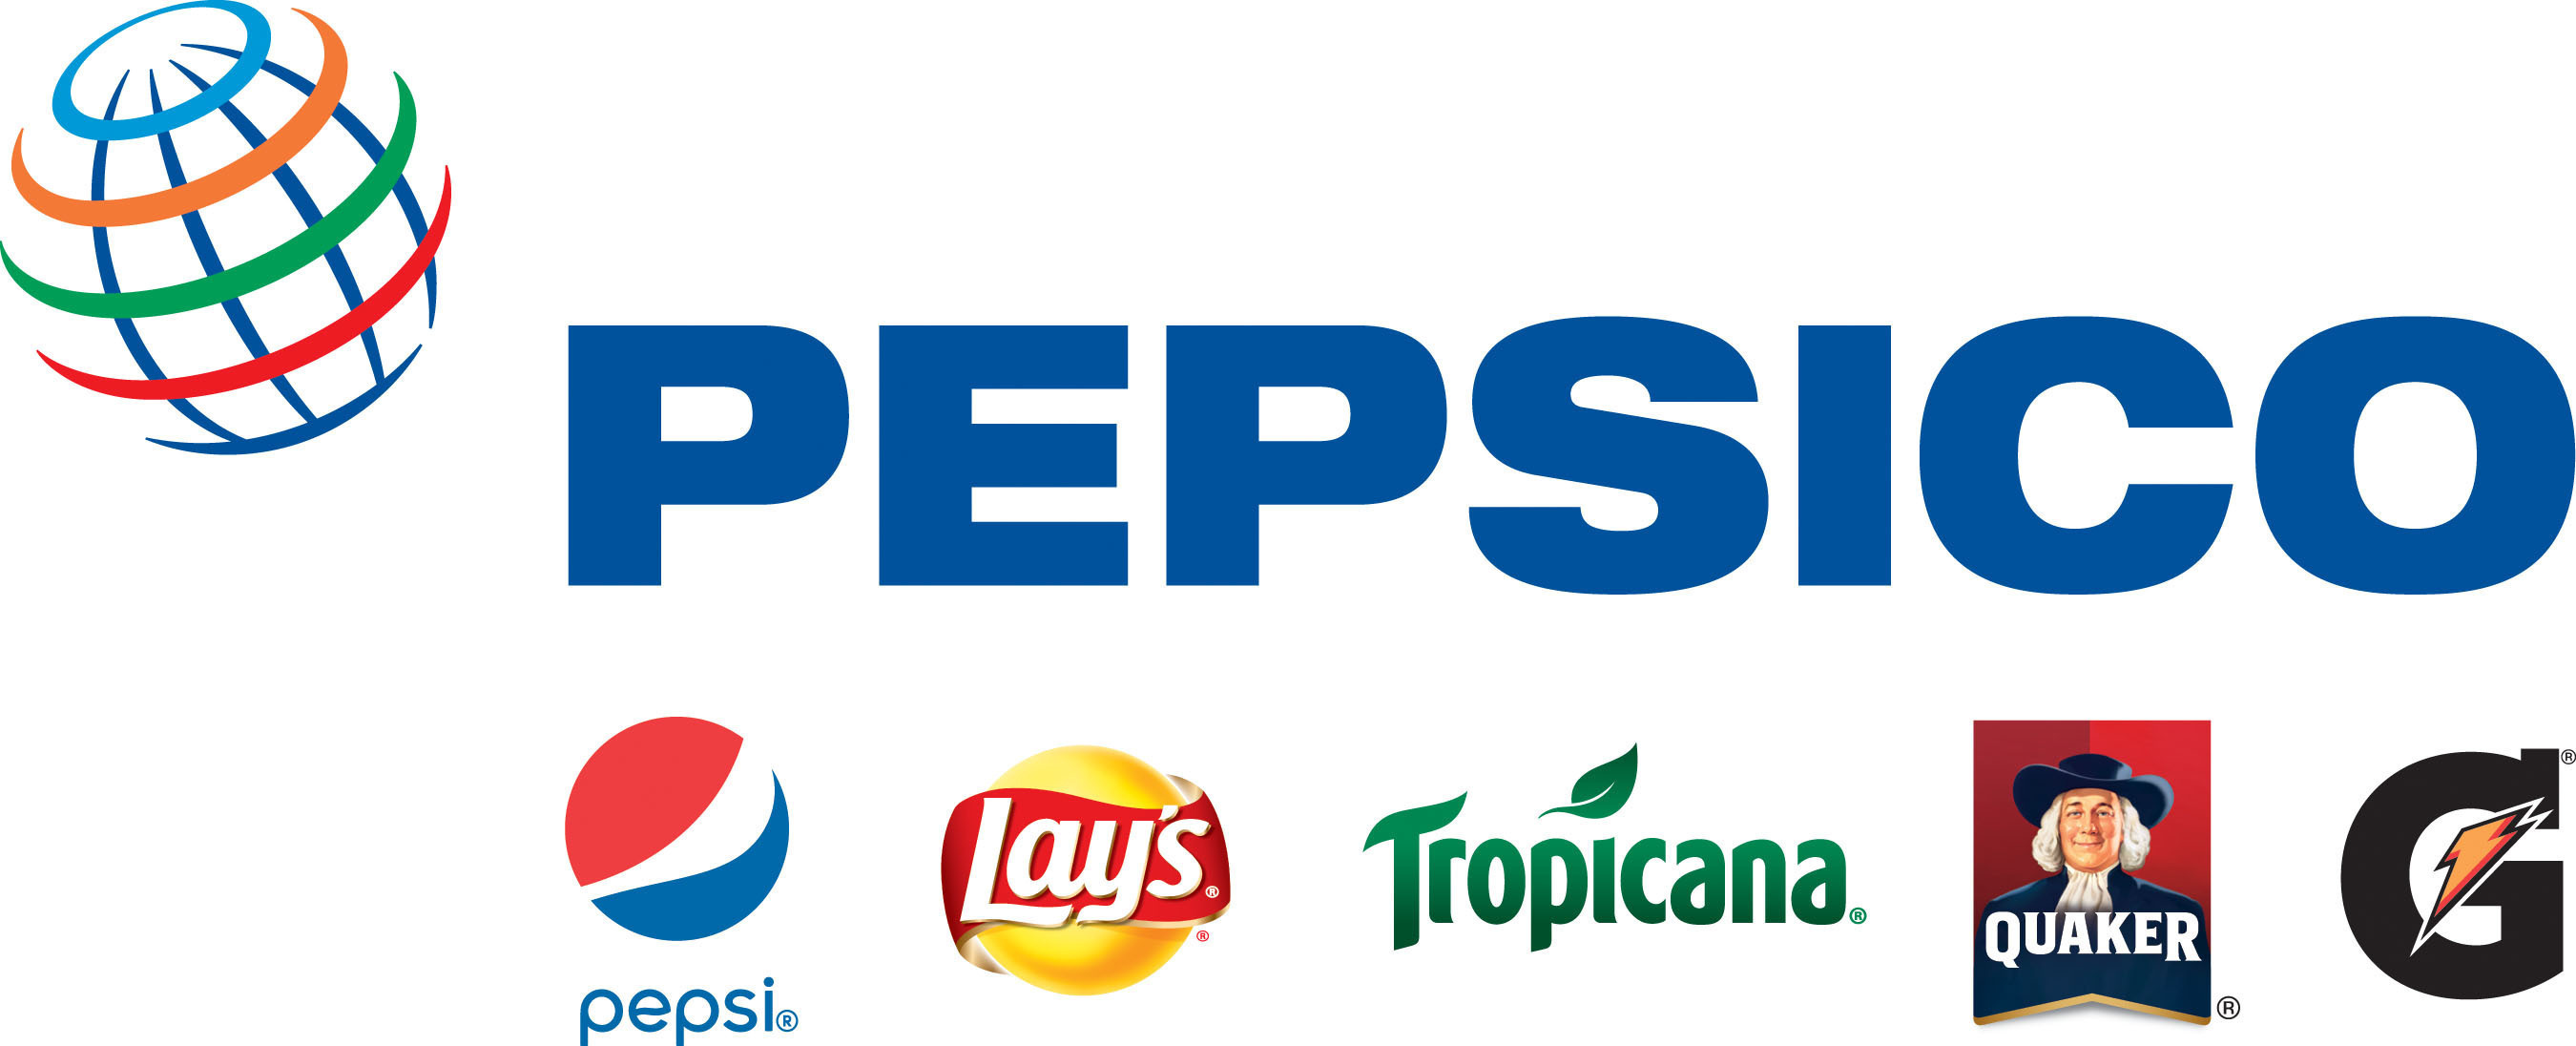 PepsiCo logo.